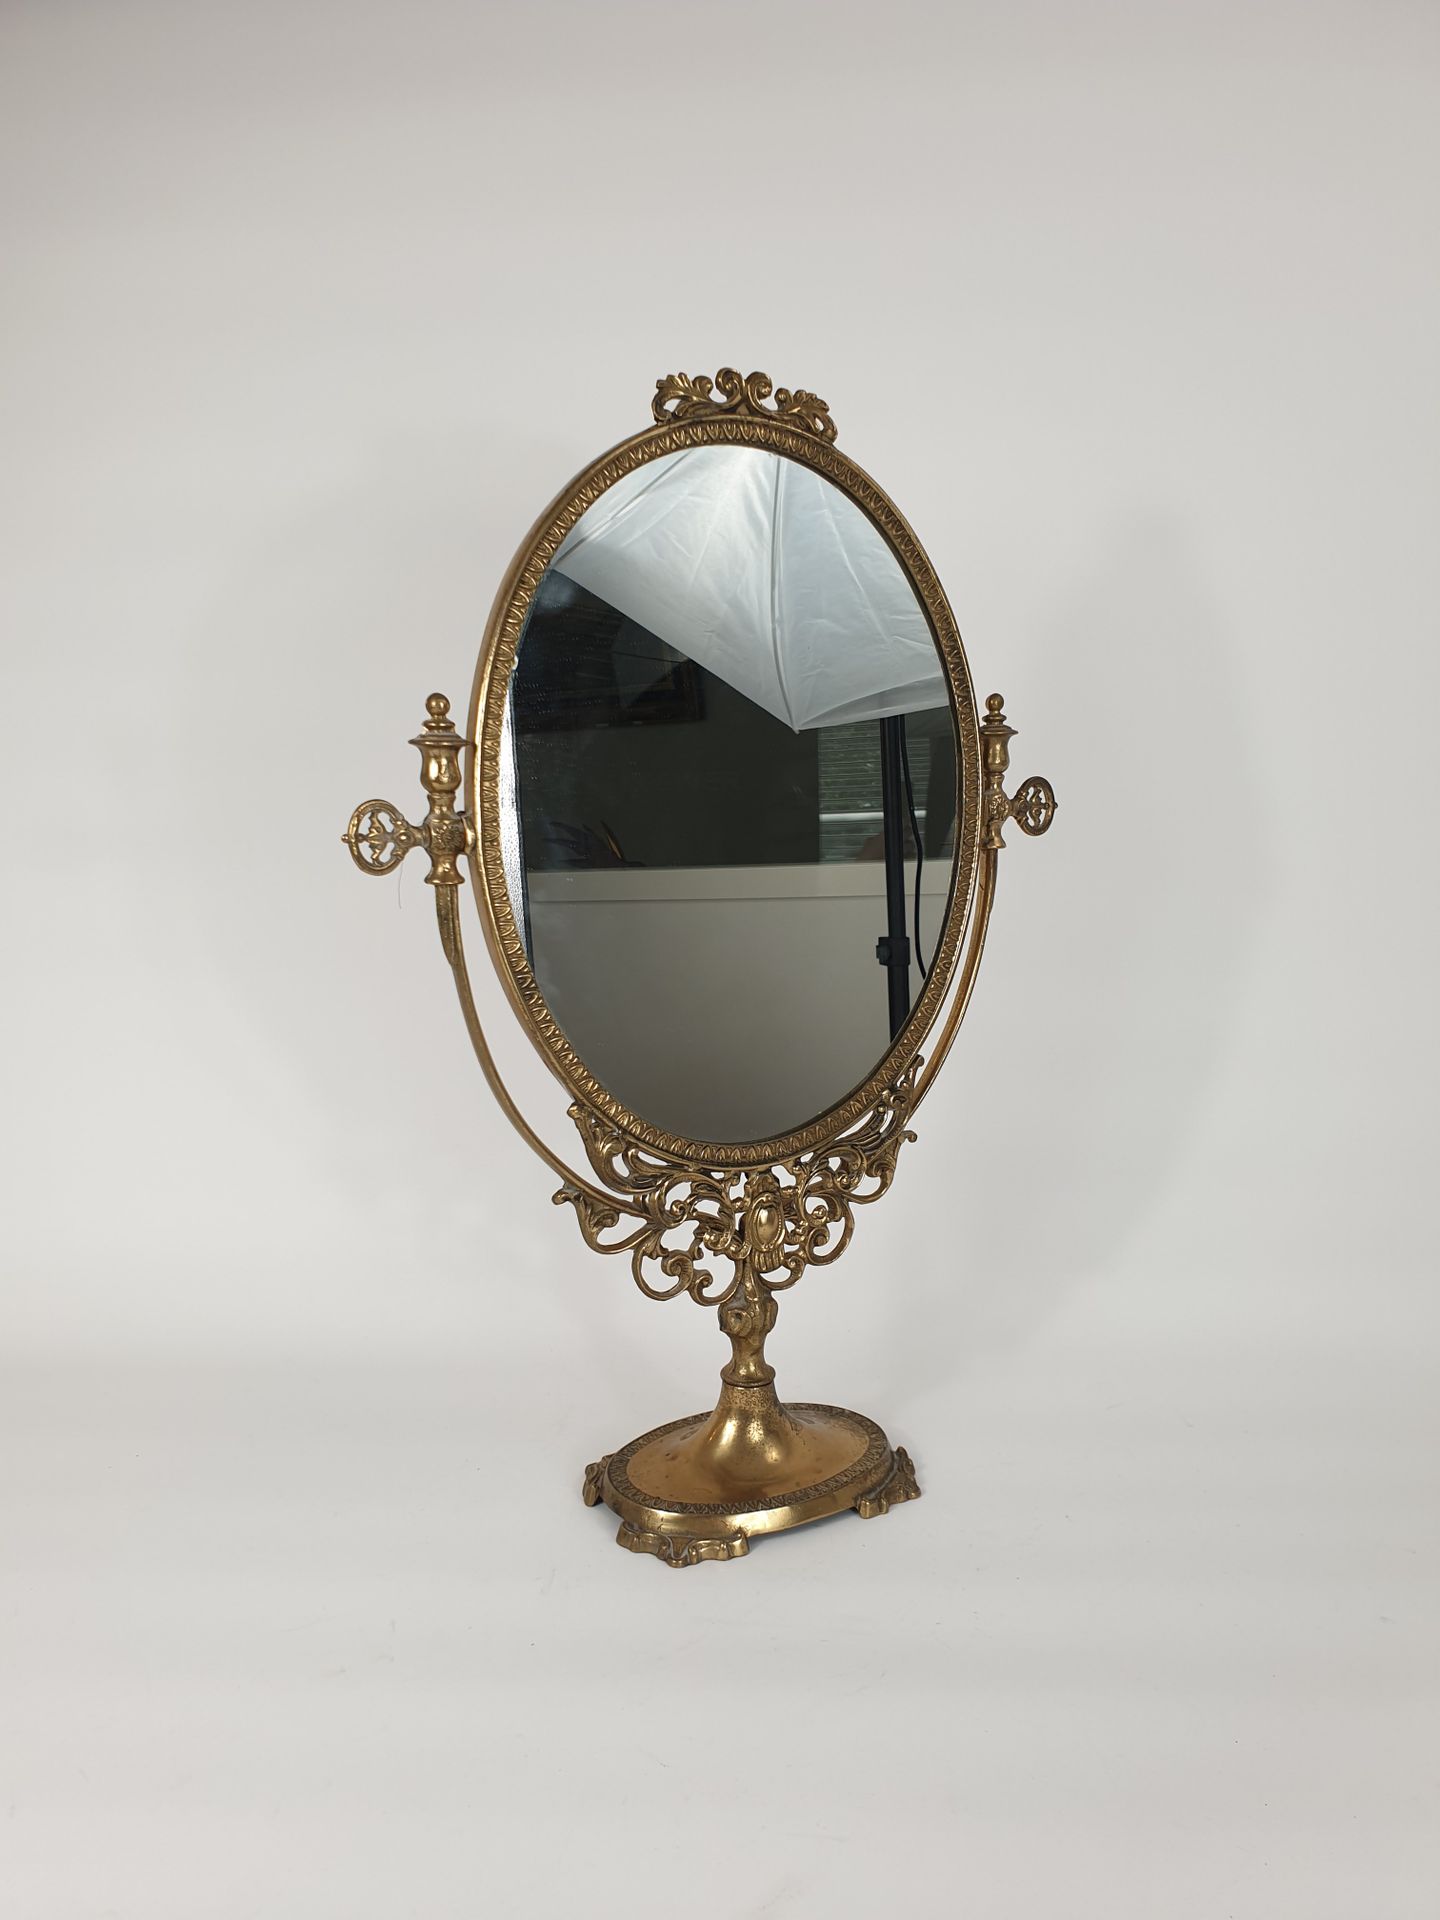 Null Tilting oval table mirror in brass.
54.5 x 39 x 12 cm